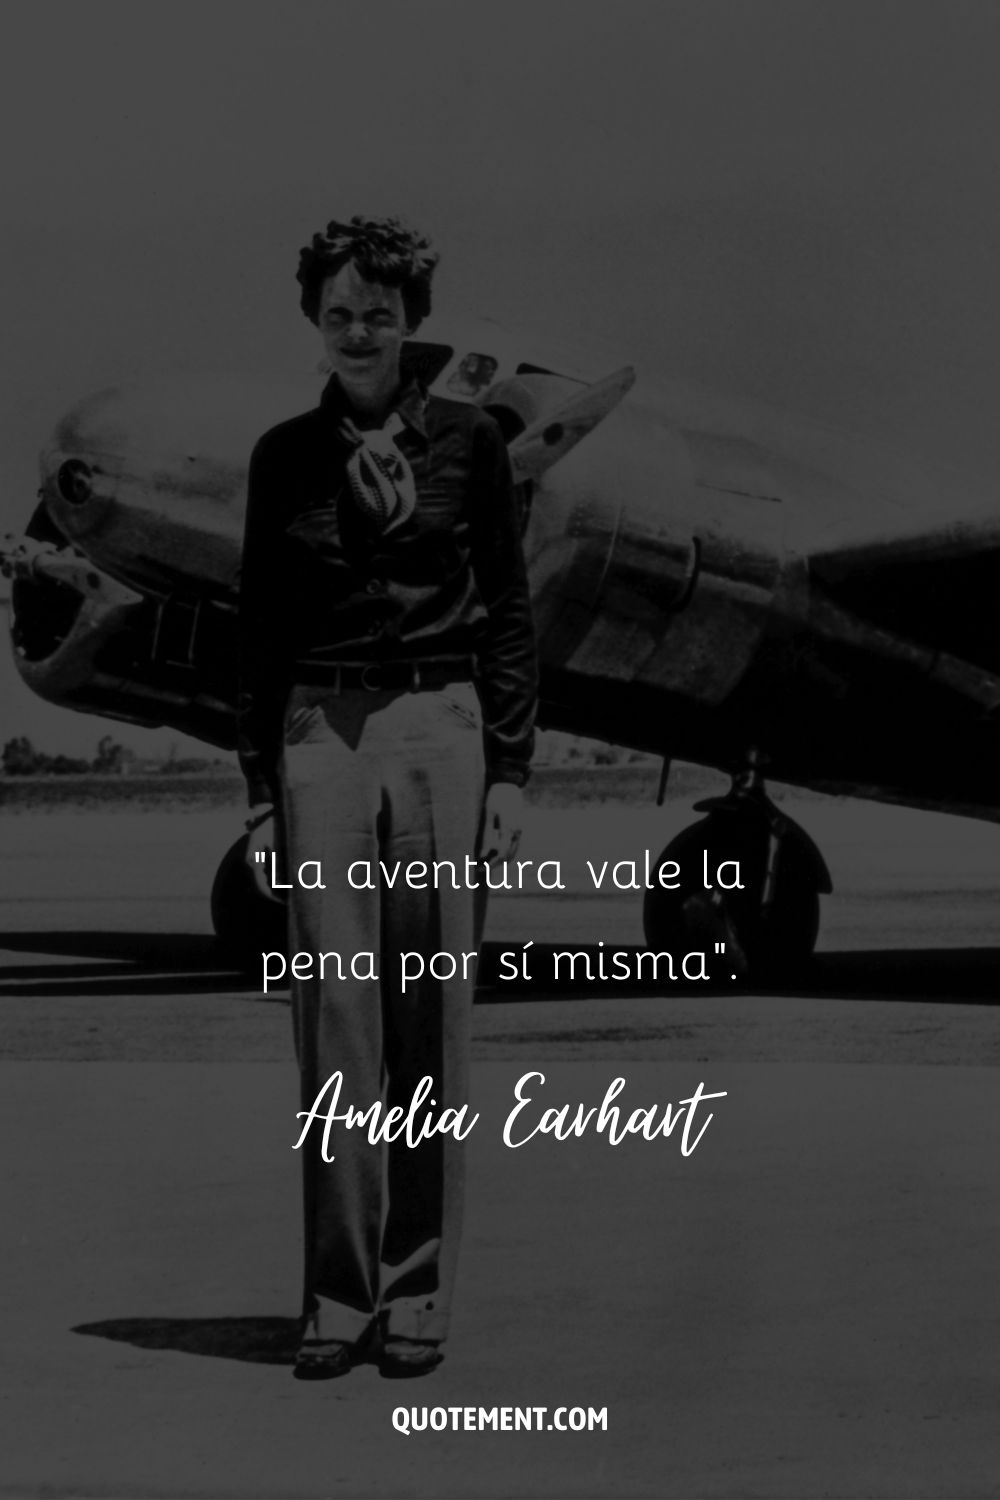 "La aventura vale la pena por sí misma". - Amelia Earhart